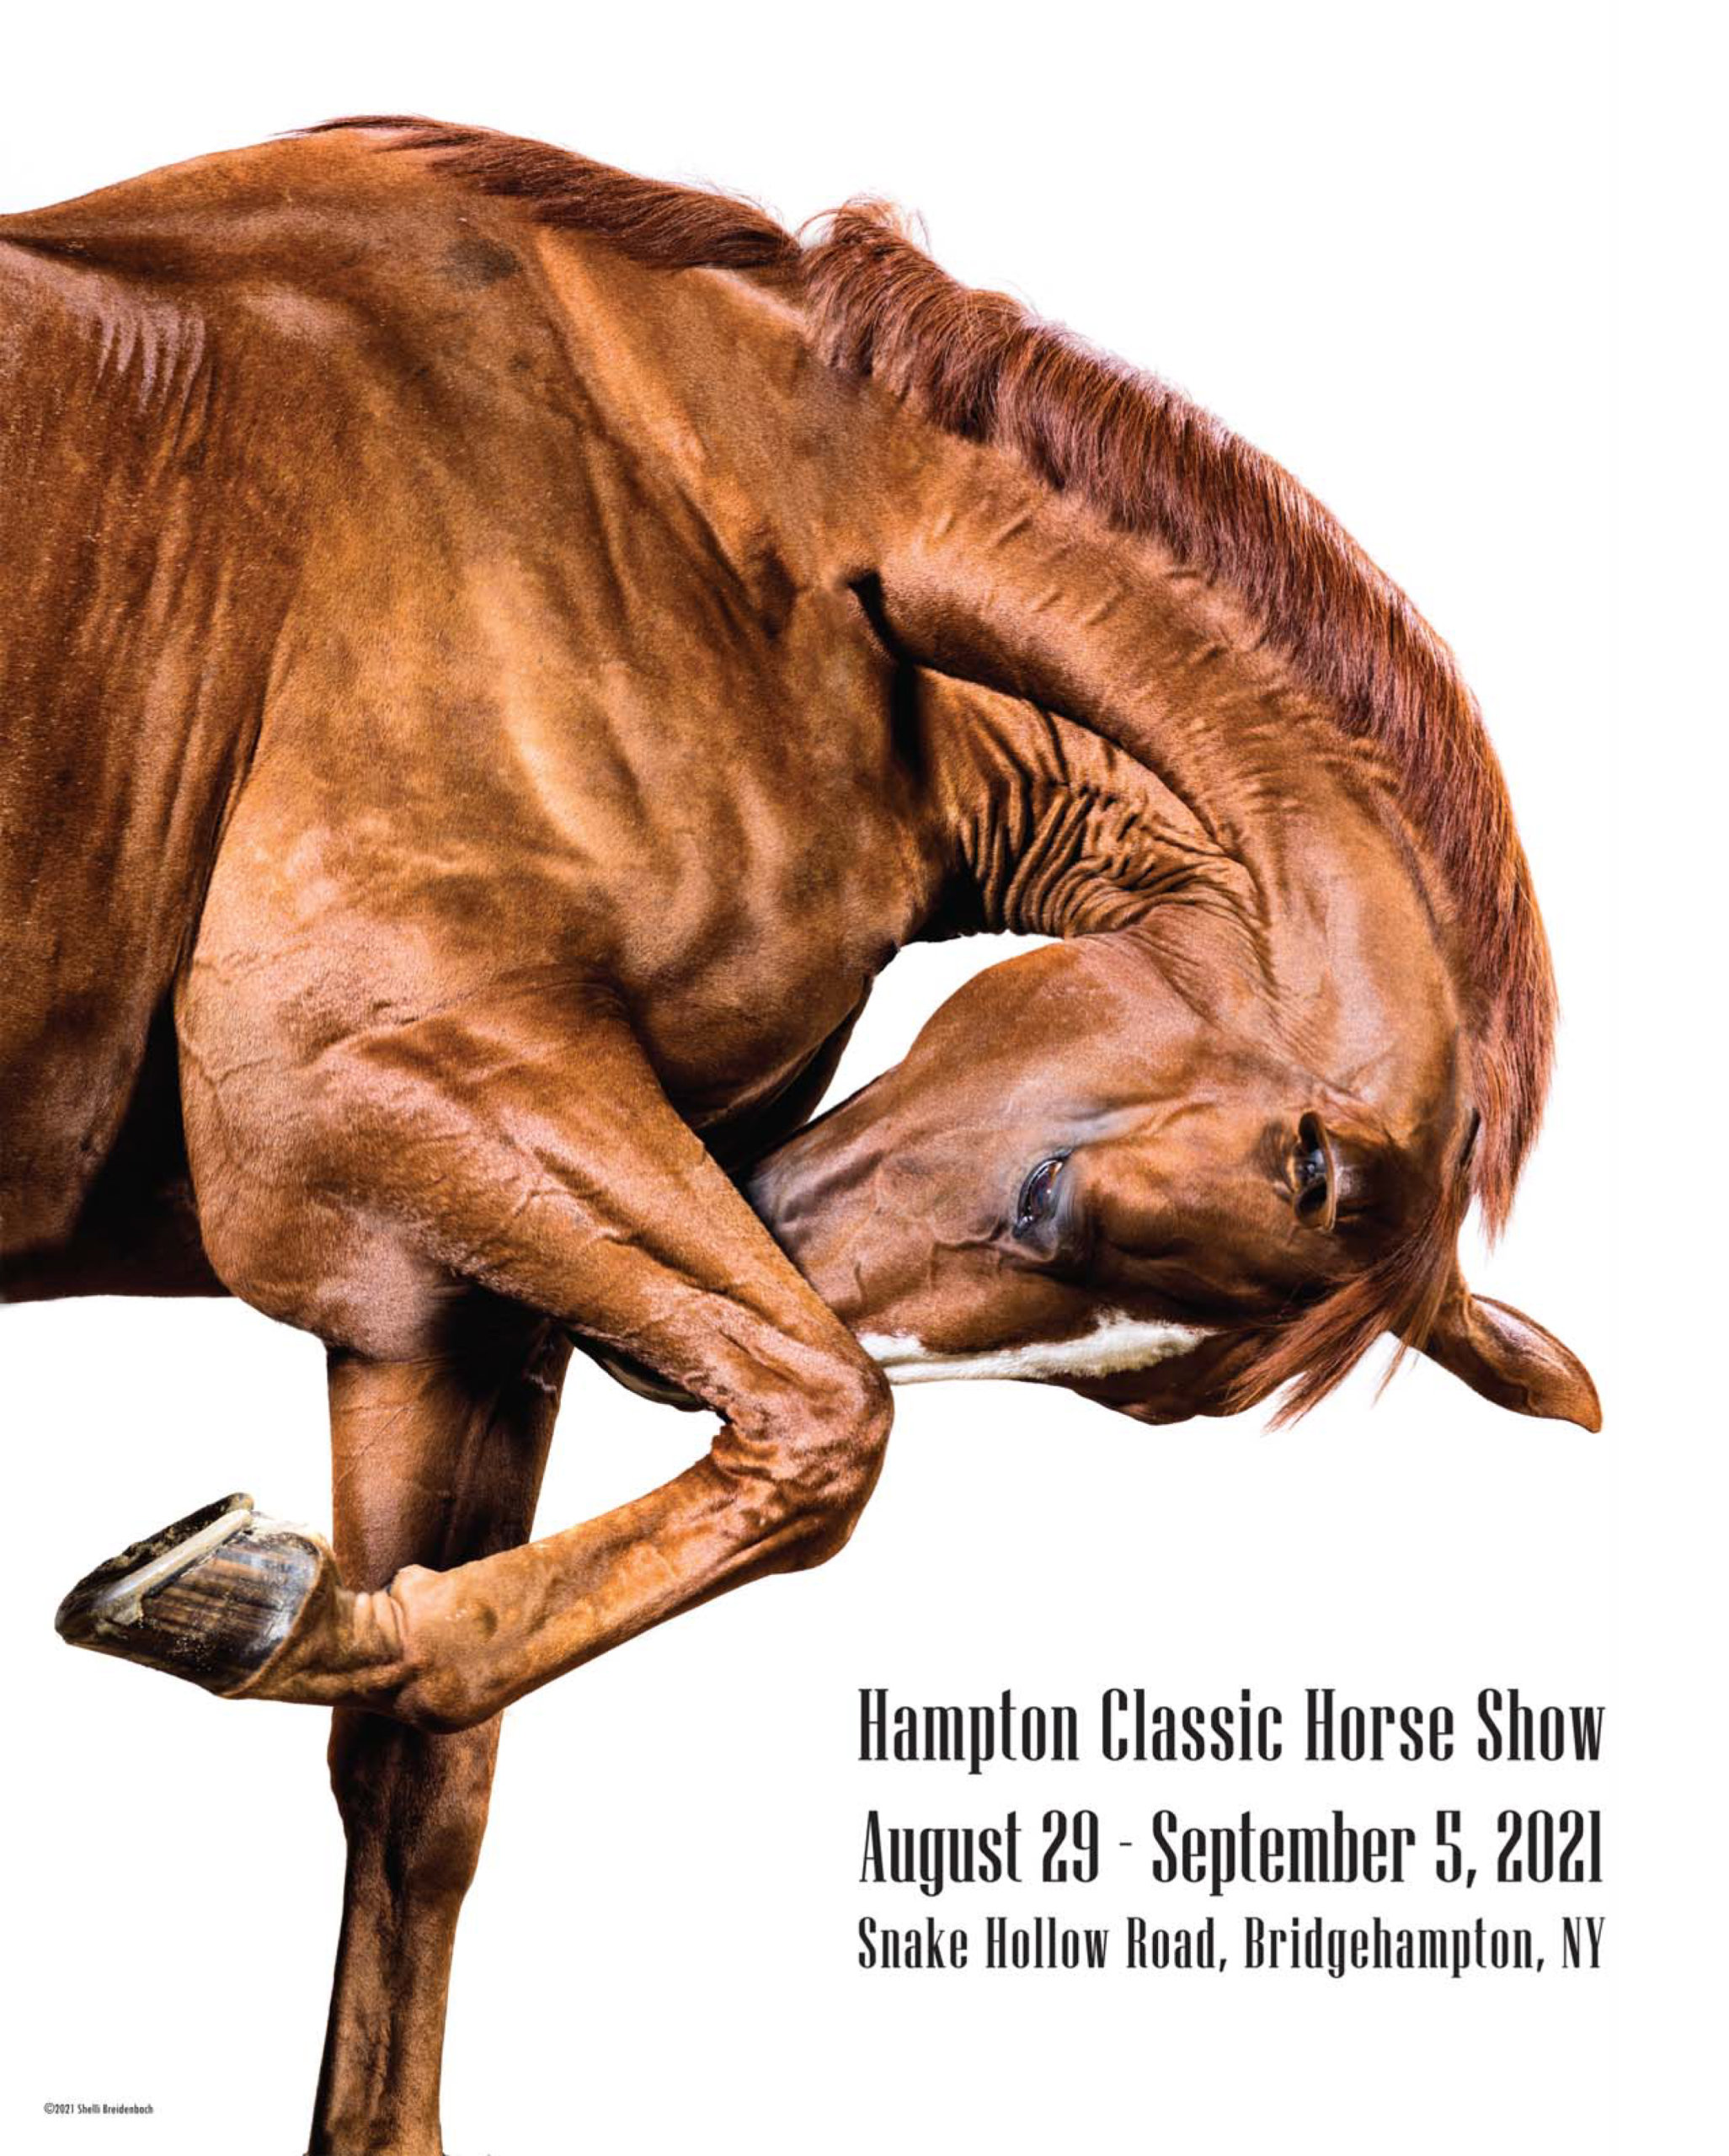 2021 Hampton Classic Horse Show poster by Shelli Breidenbach